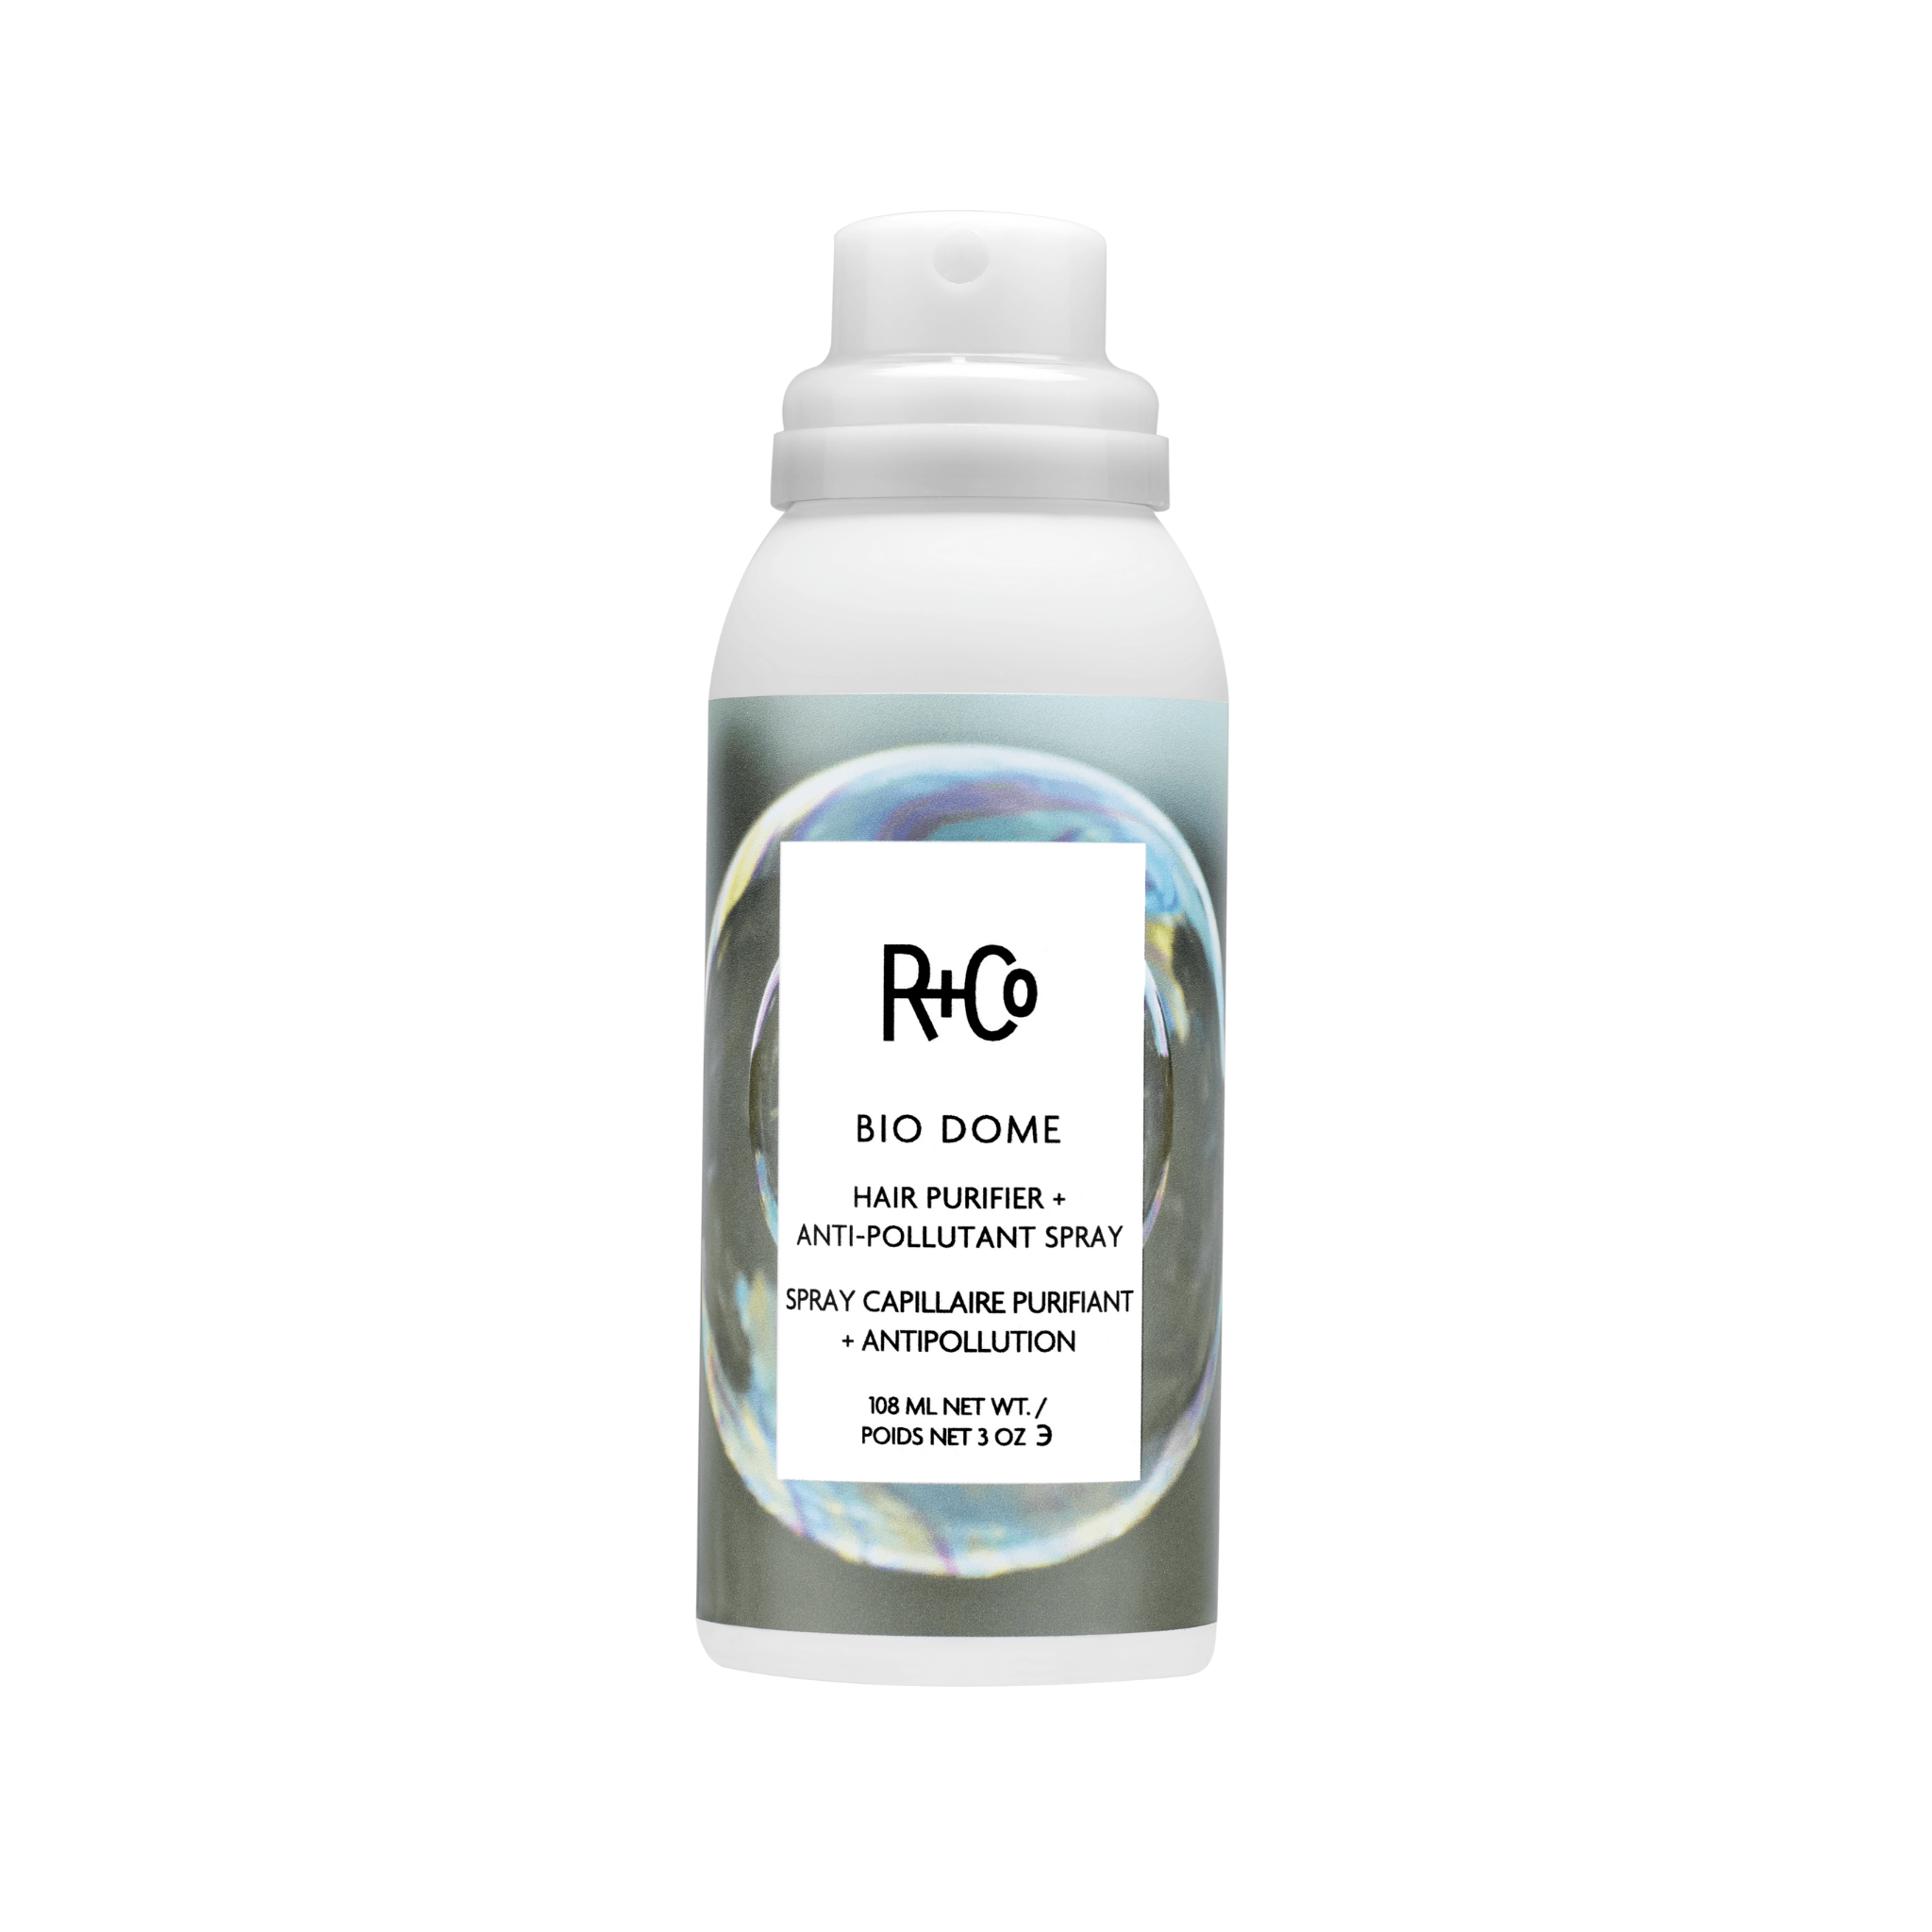 R+Co. Bio Dome Spray Capillaire Purifiant + Antipollution - 108 ml - Concept C. Shop